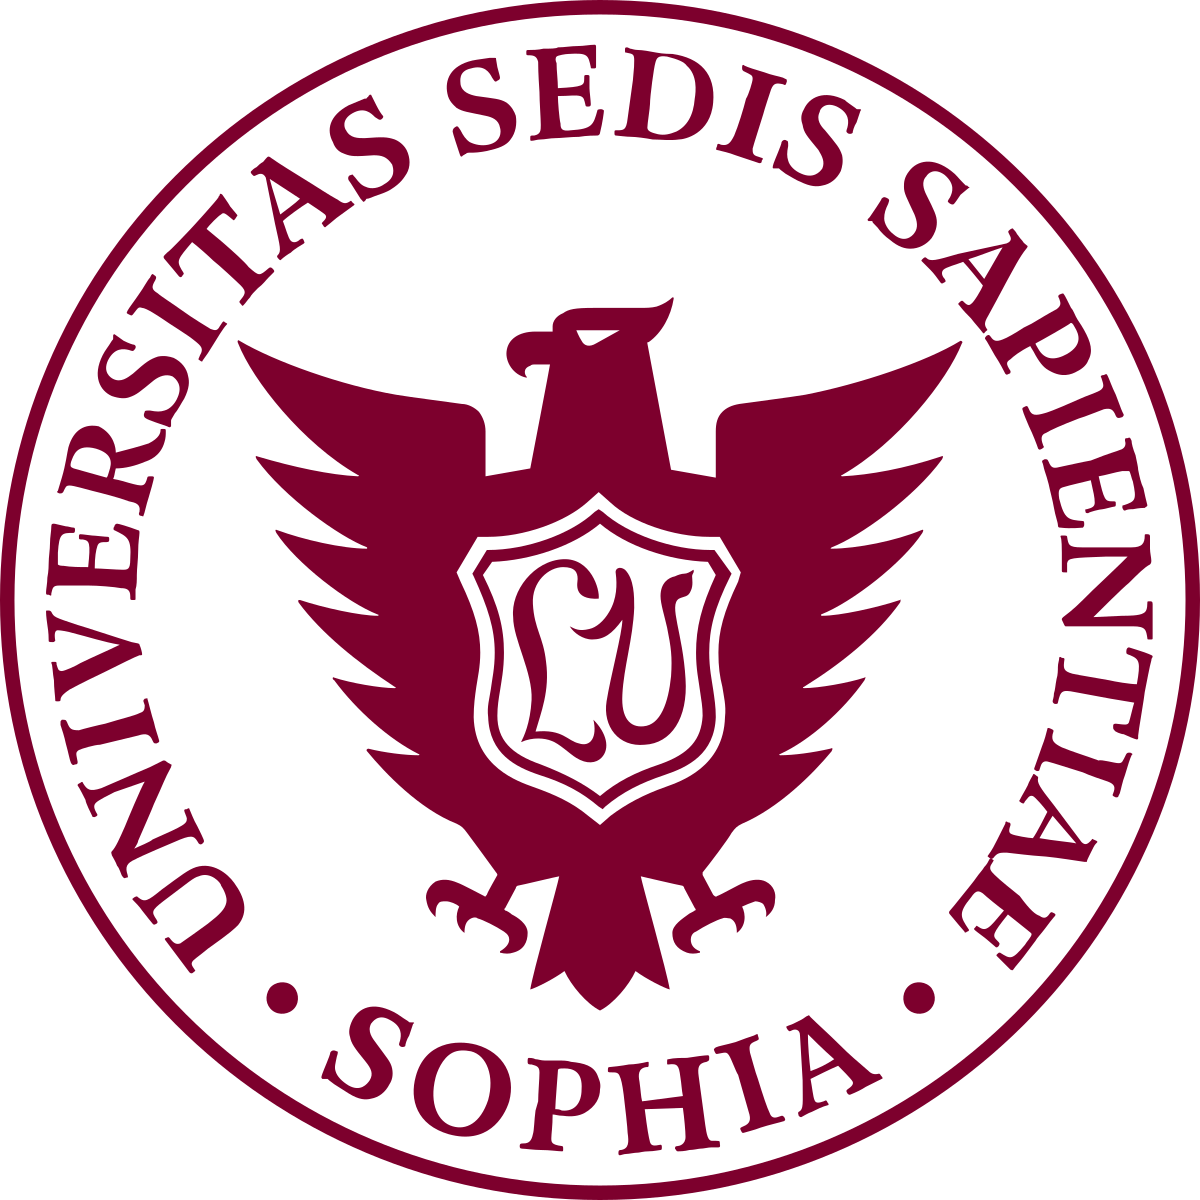 Sophia University Logo